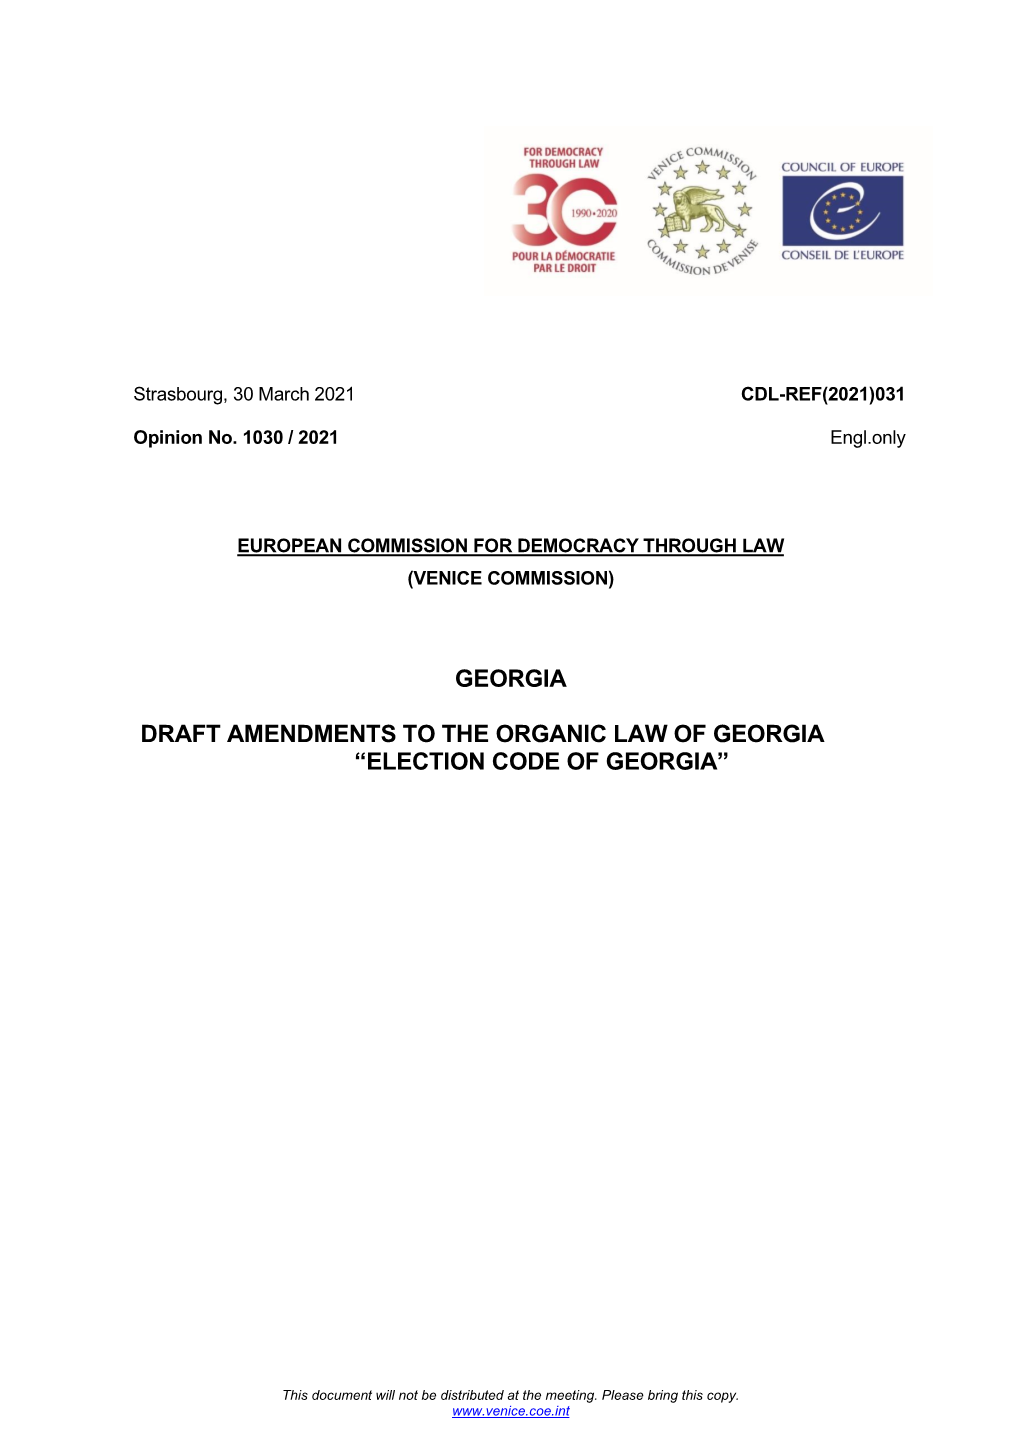 Georgia Draft Amendments to the Organic Law of Georgia